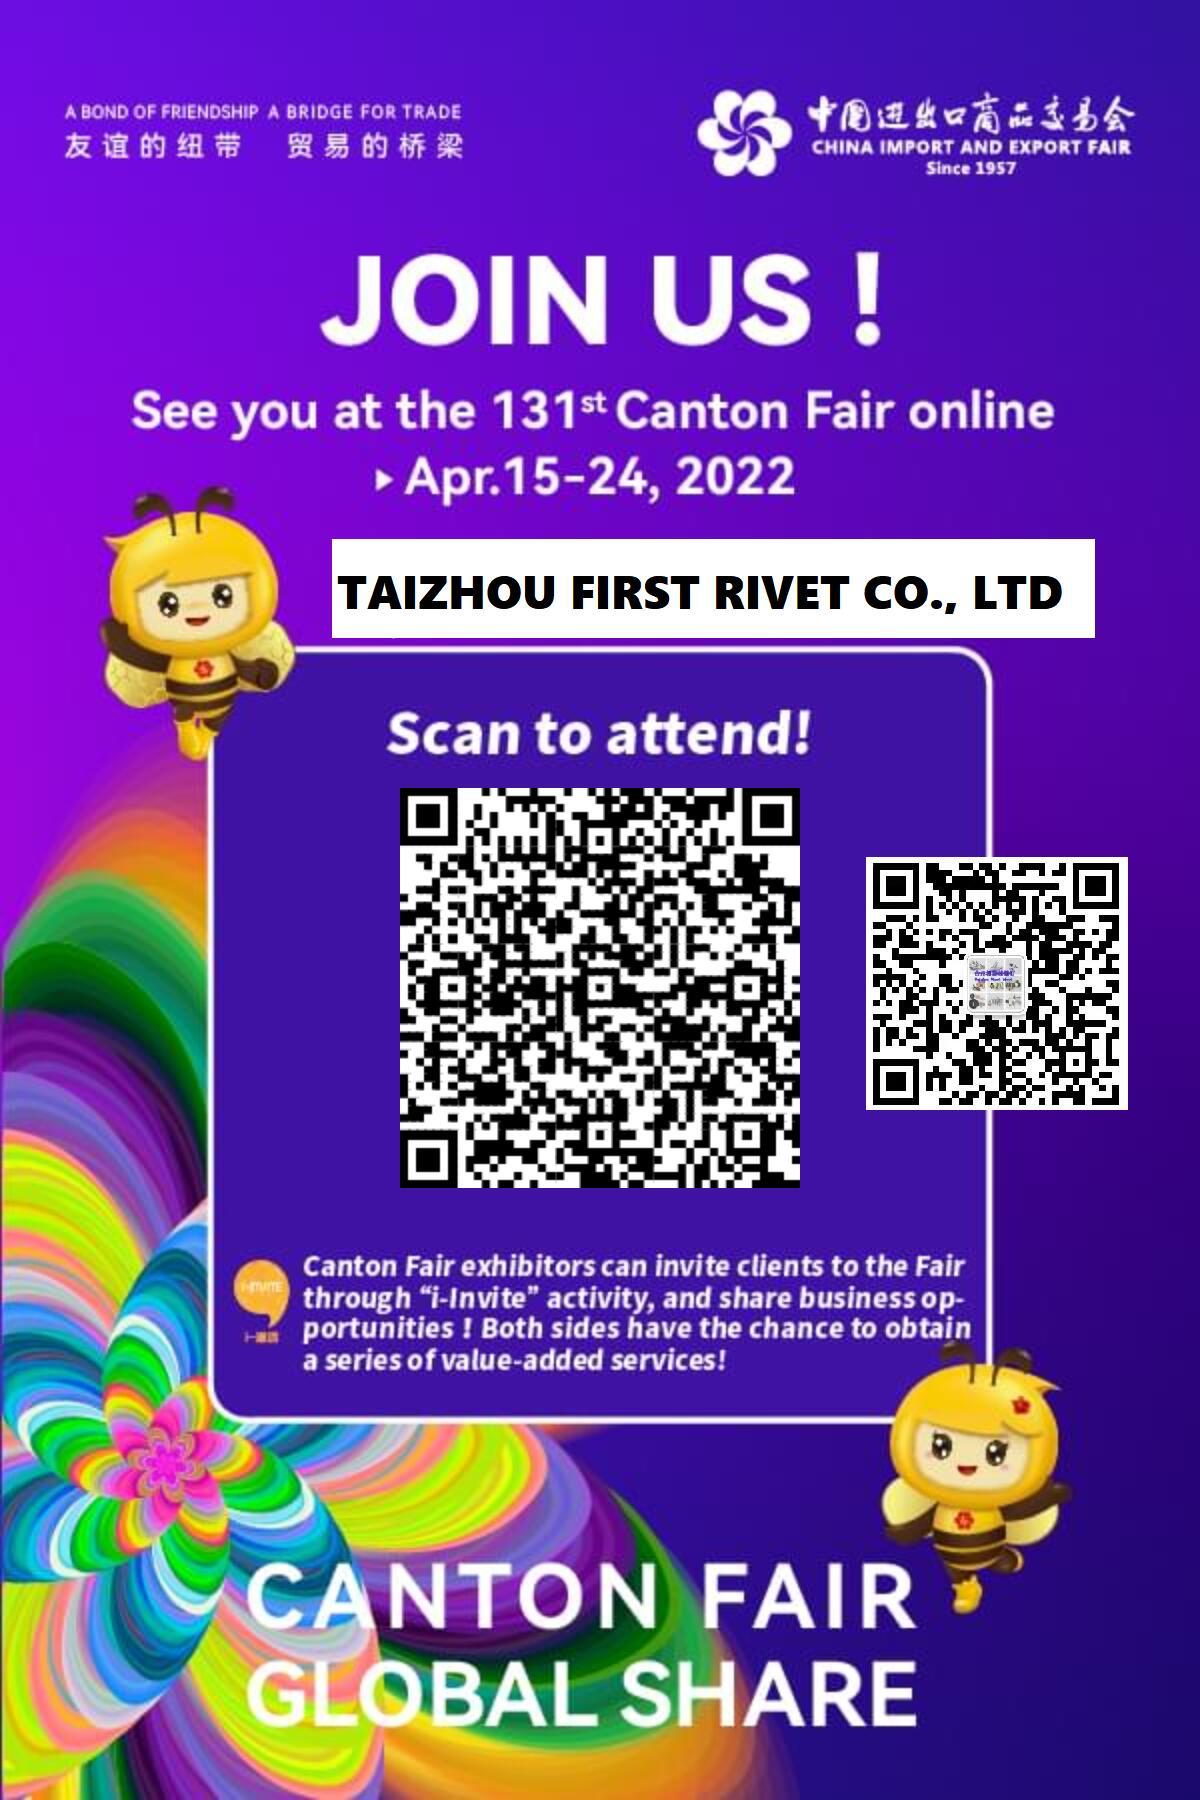 The 131st Canton Fair Cloud Exhibition